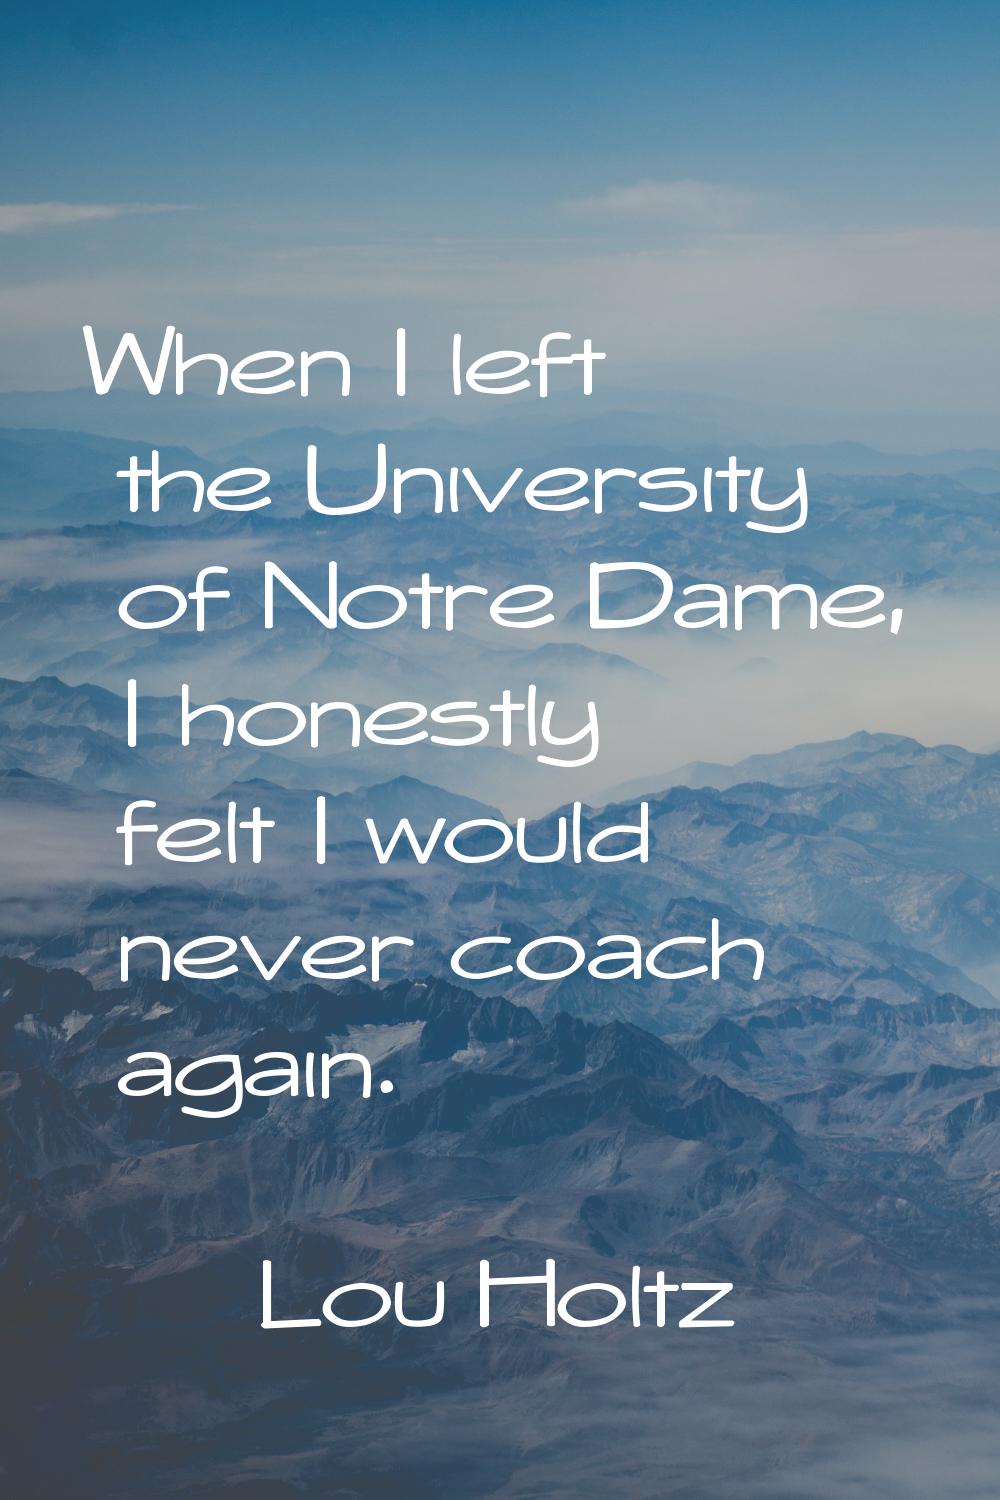 When I left the University of Notre Dame, I honestly felt I would never coach again.